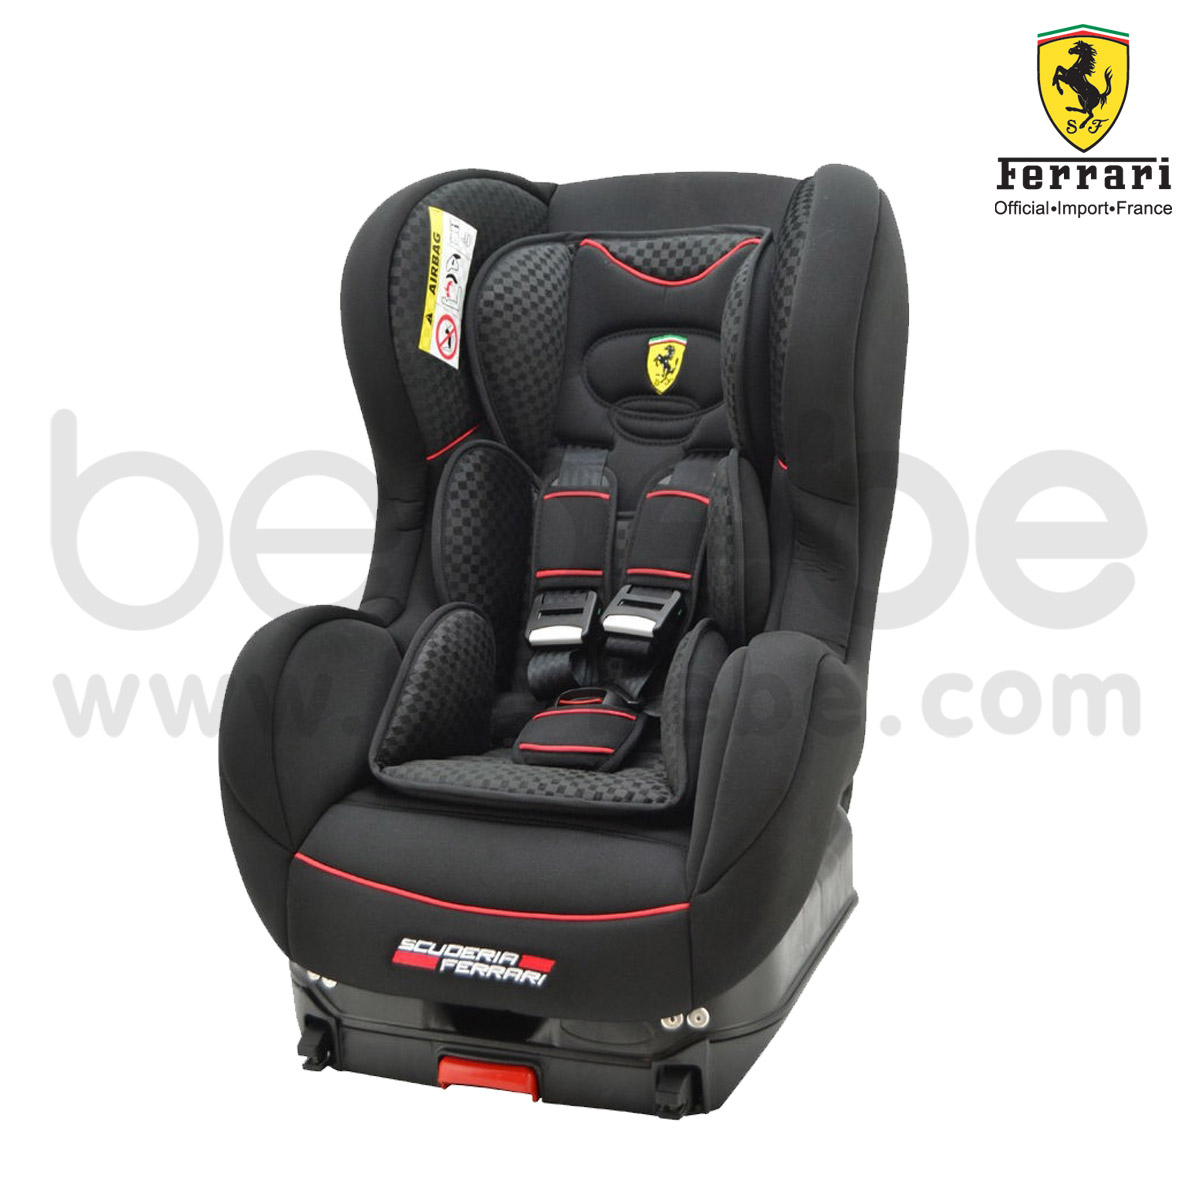 Car Seat Ferrari : CosmoSP ISOFIX (Black) ***สินค้าหมดชั่วคราว***